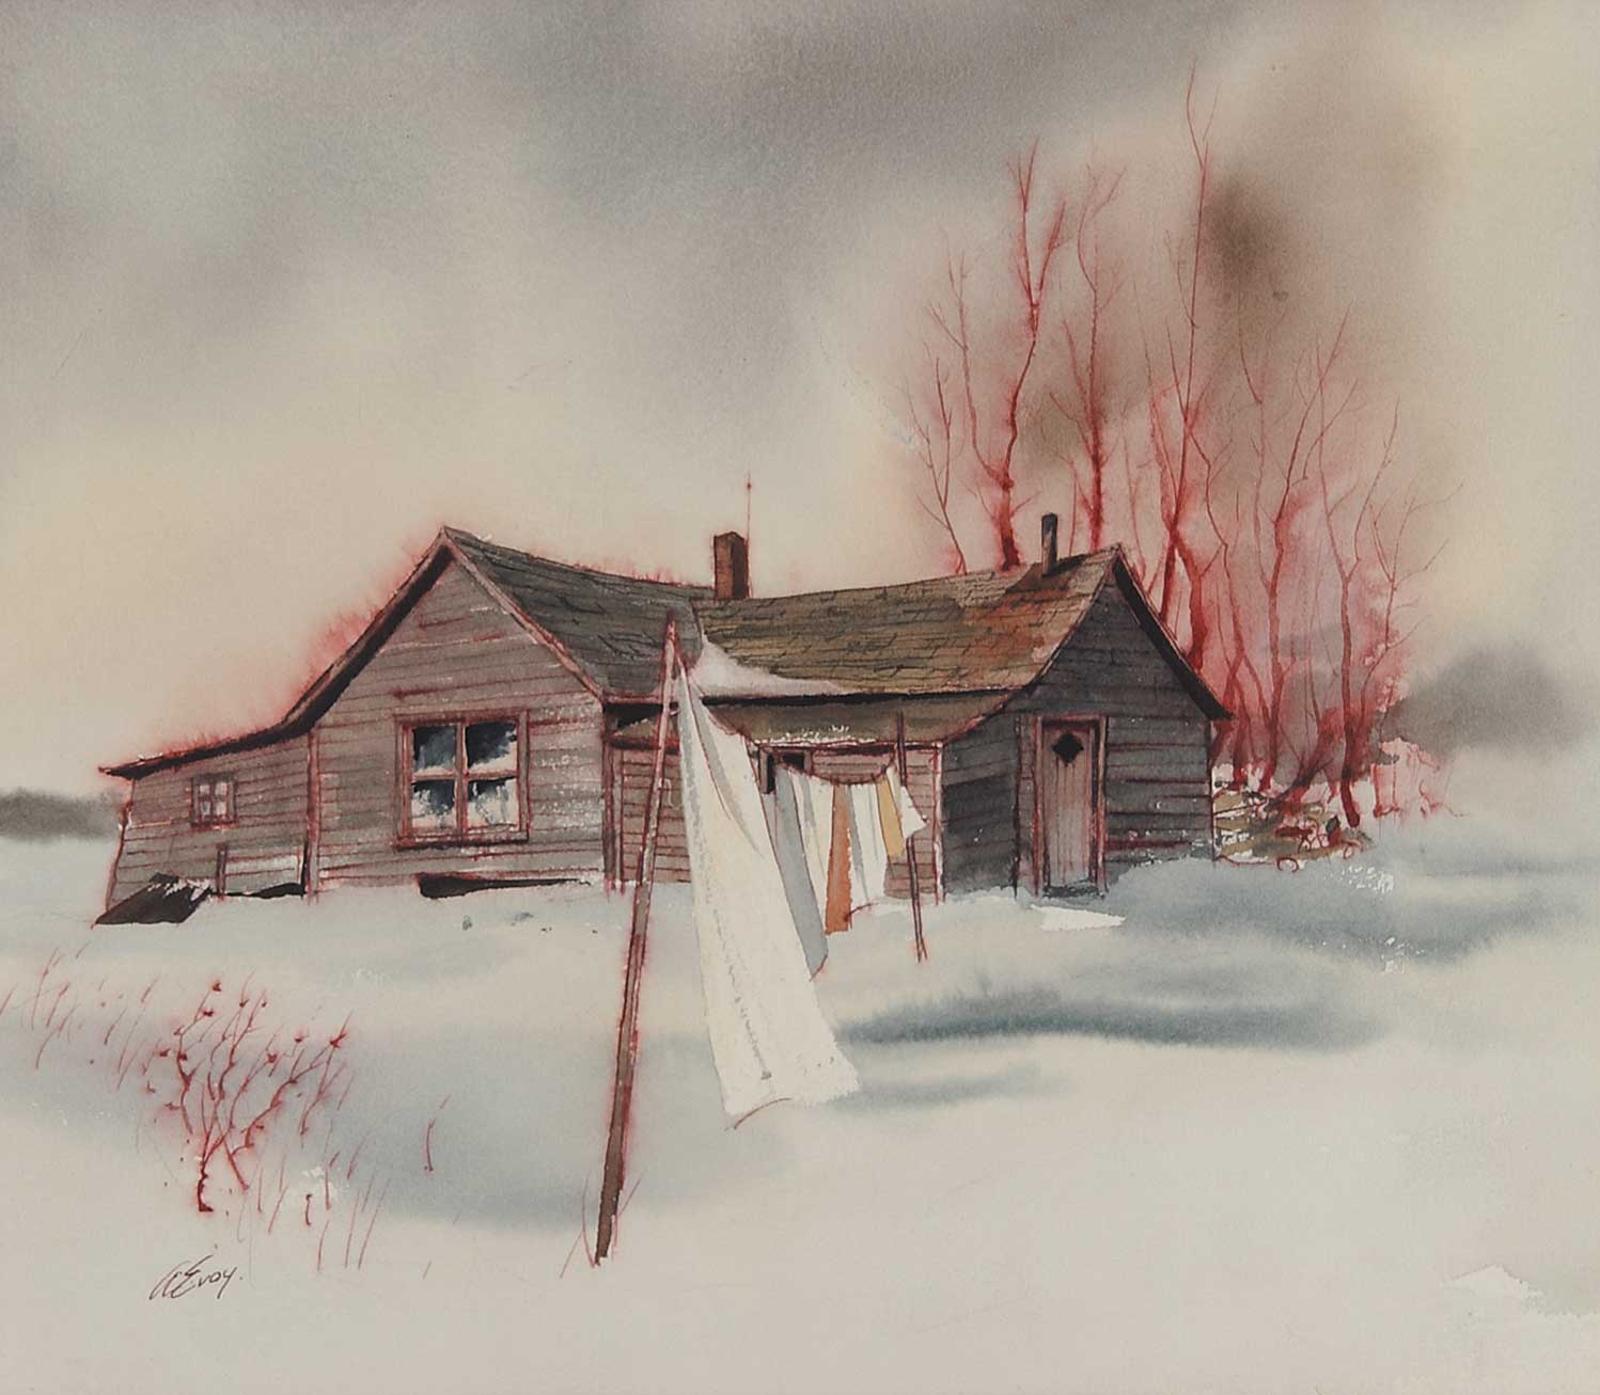 George Arthur [Art] Evoy - House